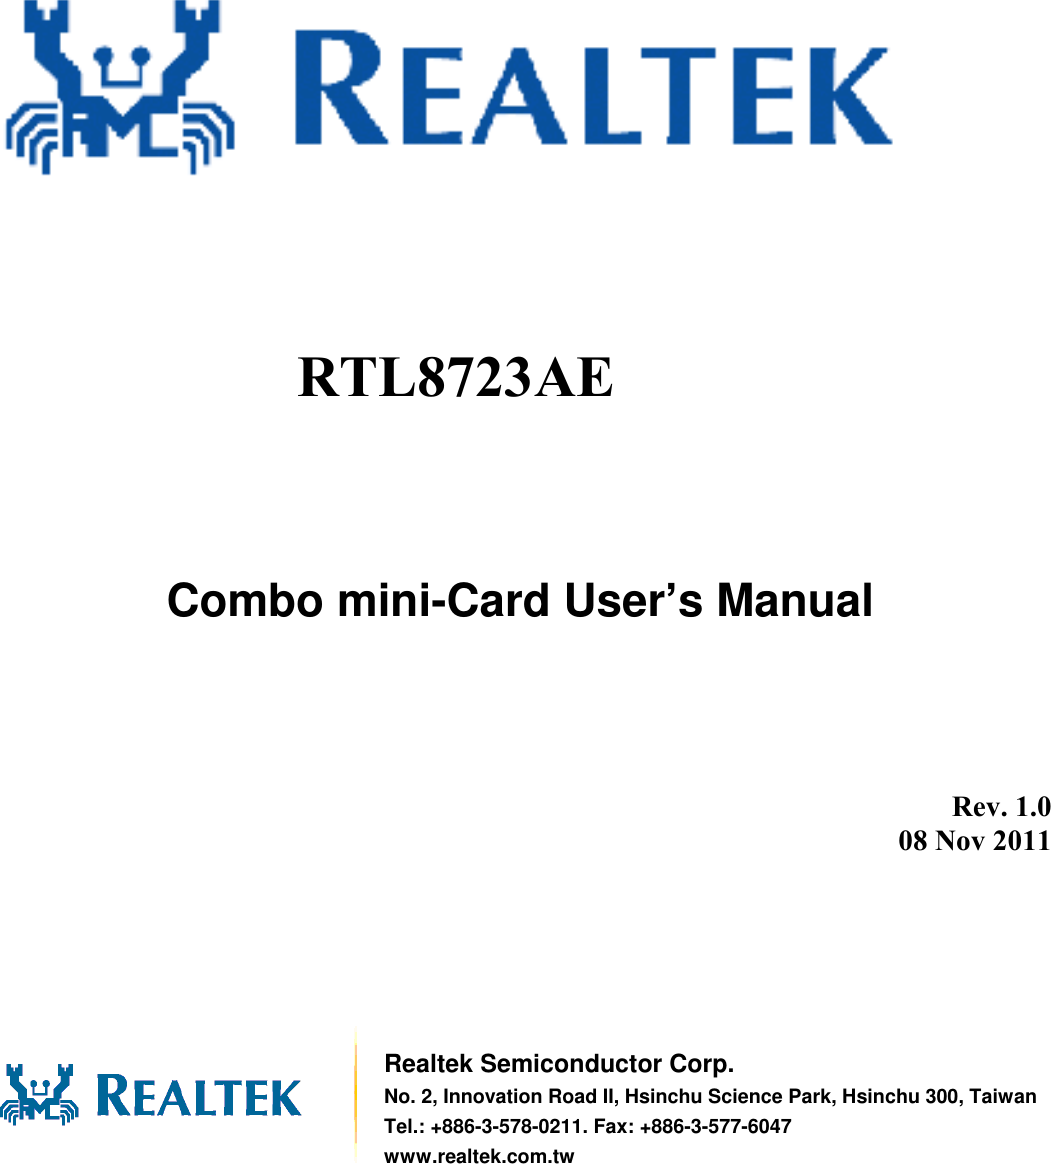                Combo mini-Card User’s Manual         Rev. 1.0 08 Nov 2011        Realtek Semiconductor Corp. No. 2, Innovation Road II, Hsinchu Science Park, Hsinchu 300, Taiwan Tel.: +886-3-578-0211. Fax: +886-3-577-6047 www.realtek.com.tw RTL8723AE  